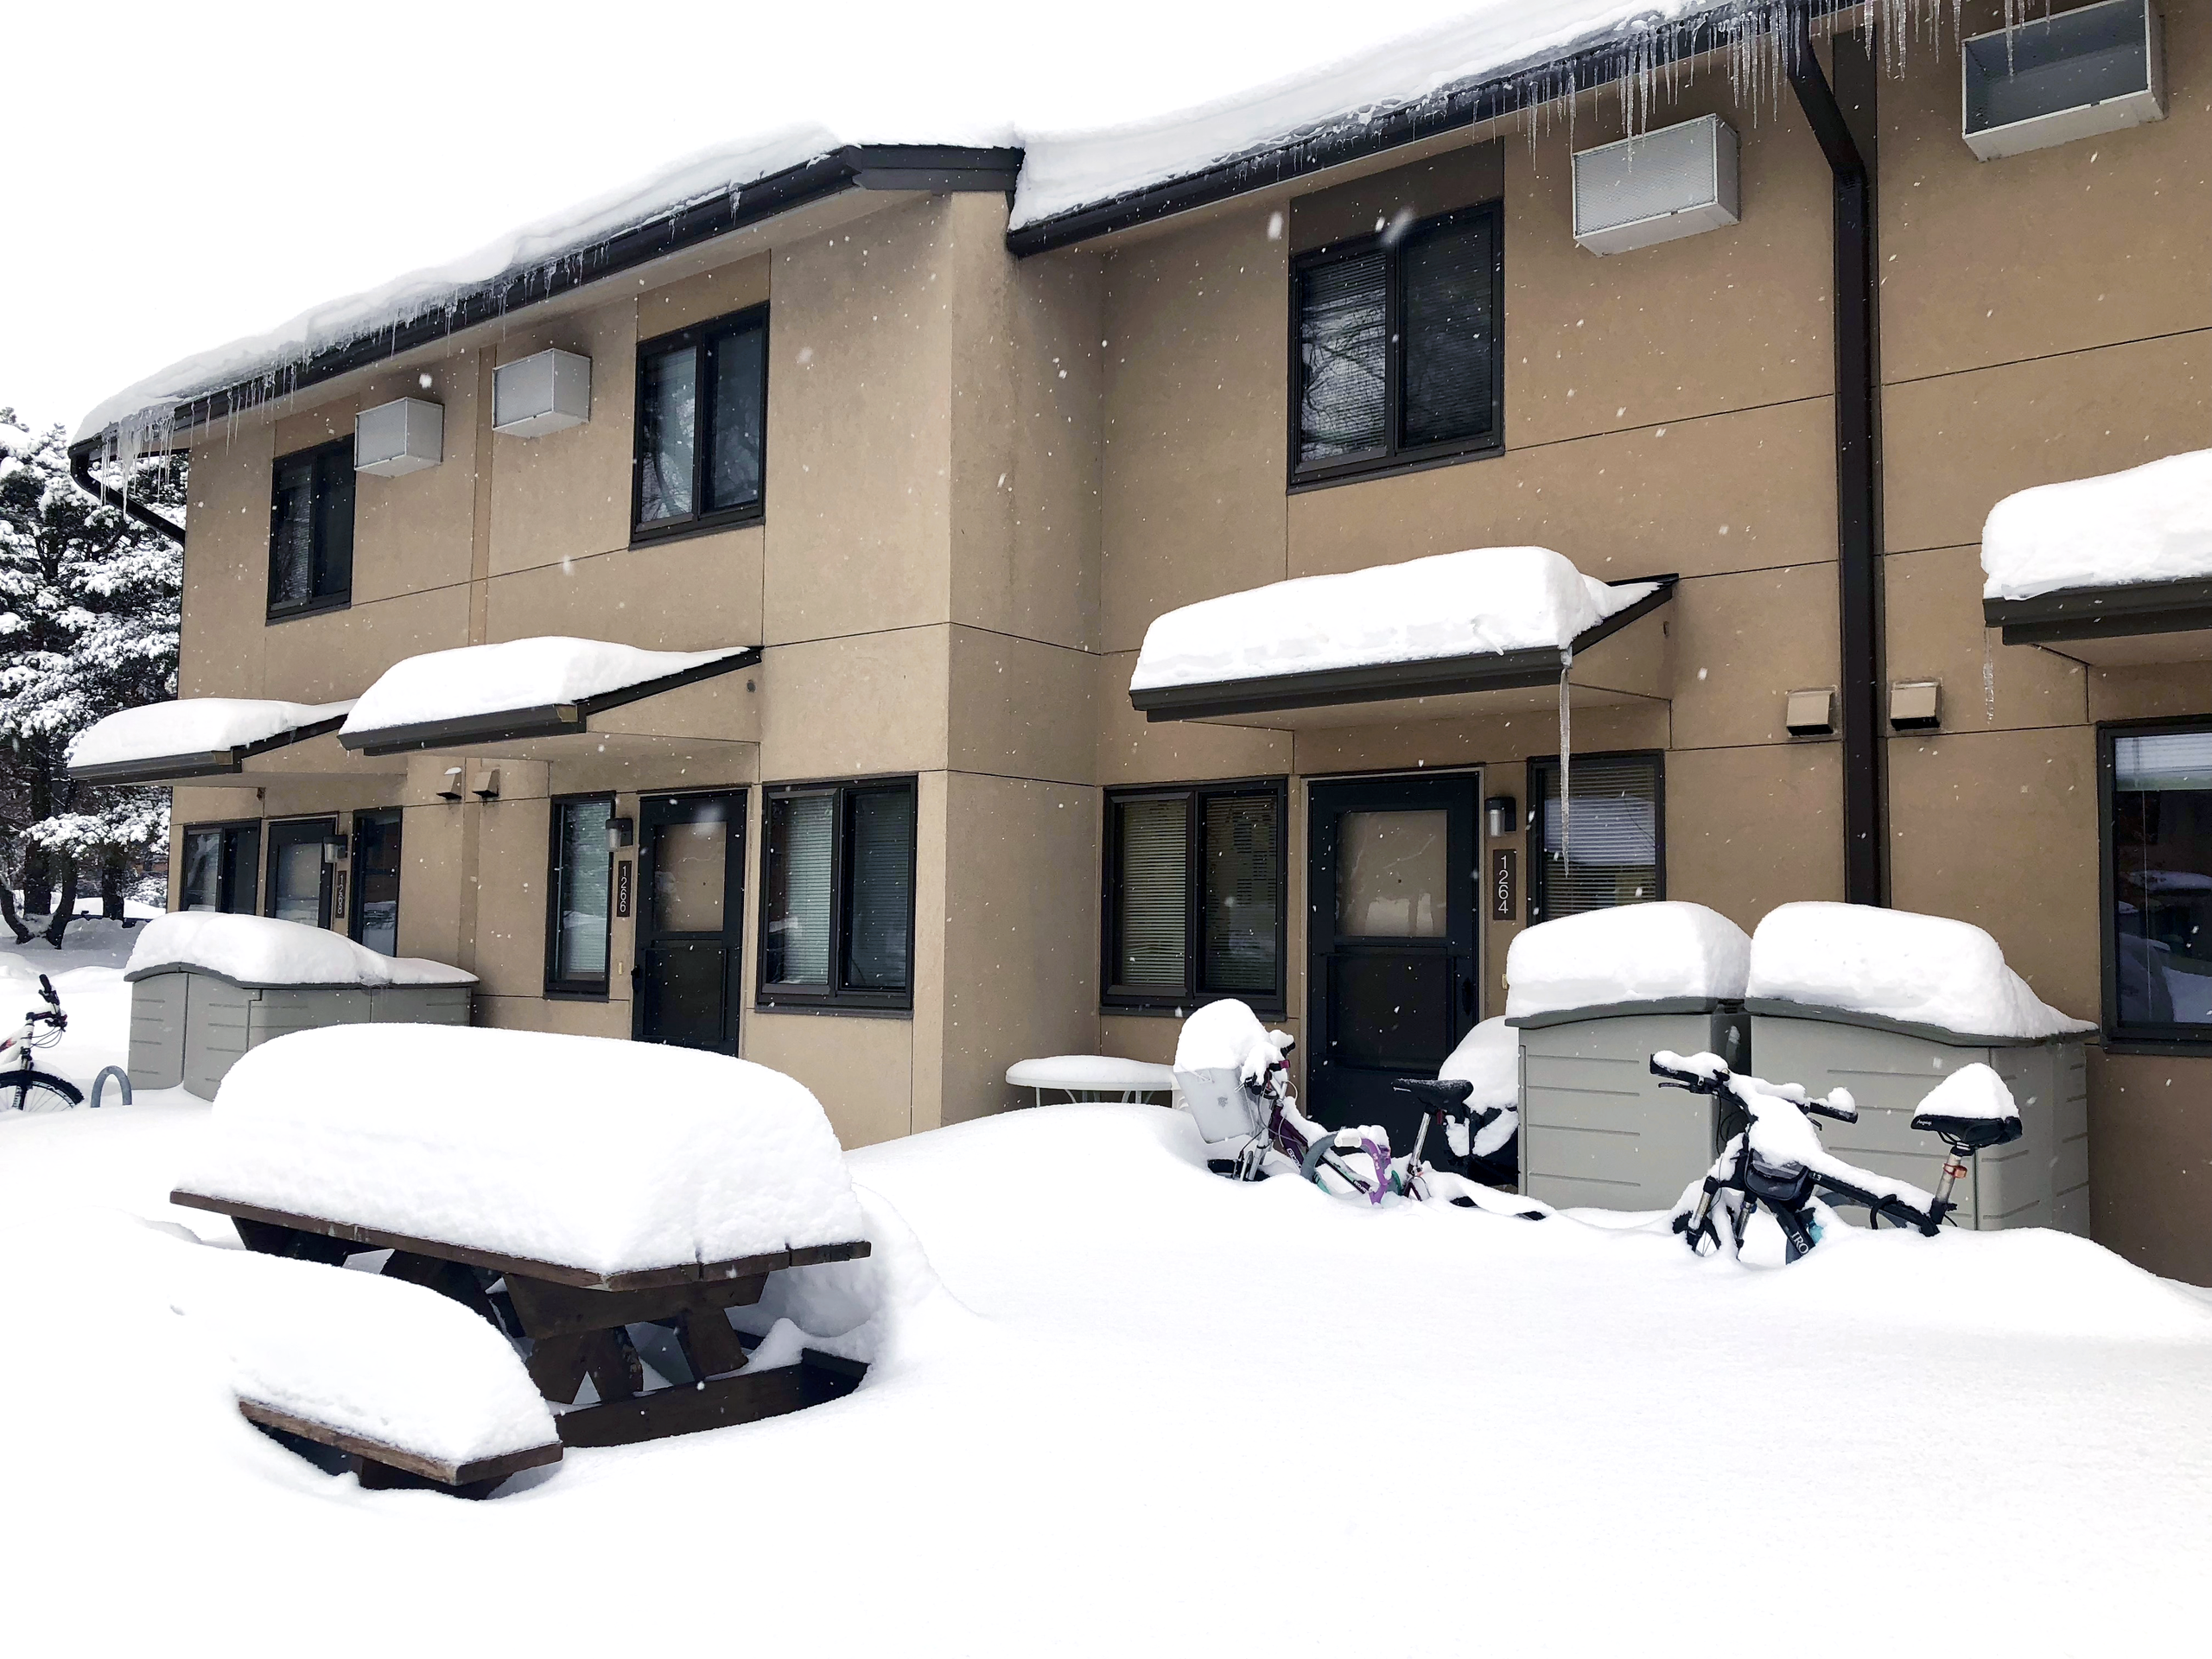 Heavy snowfall on CTC buildings